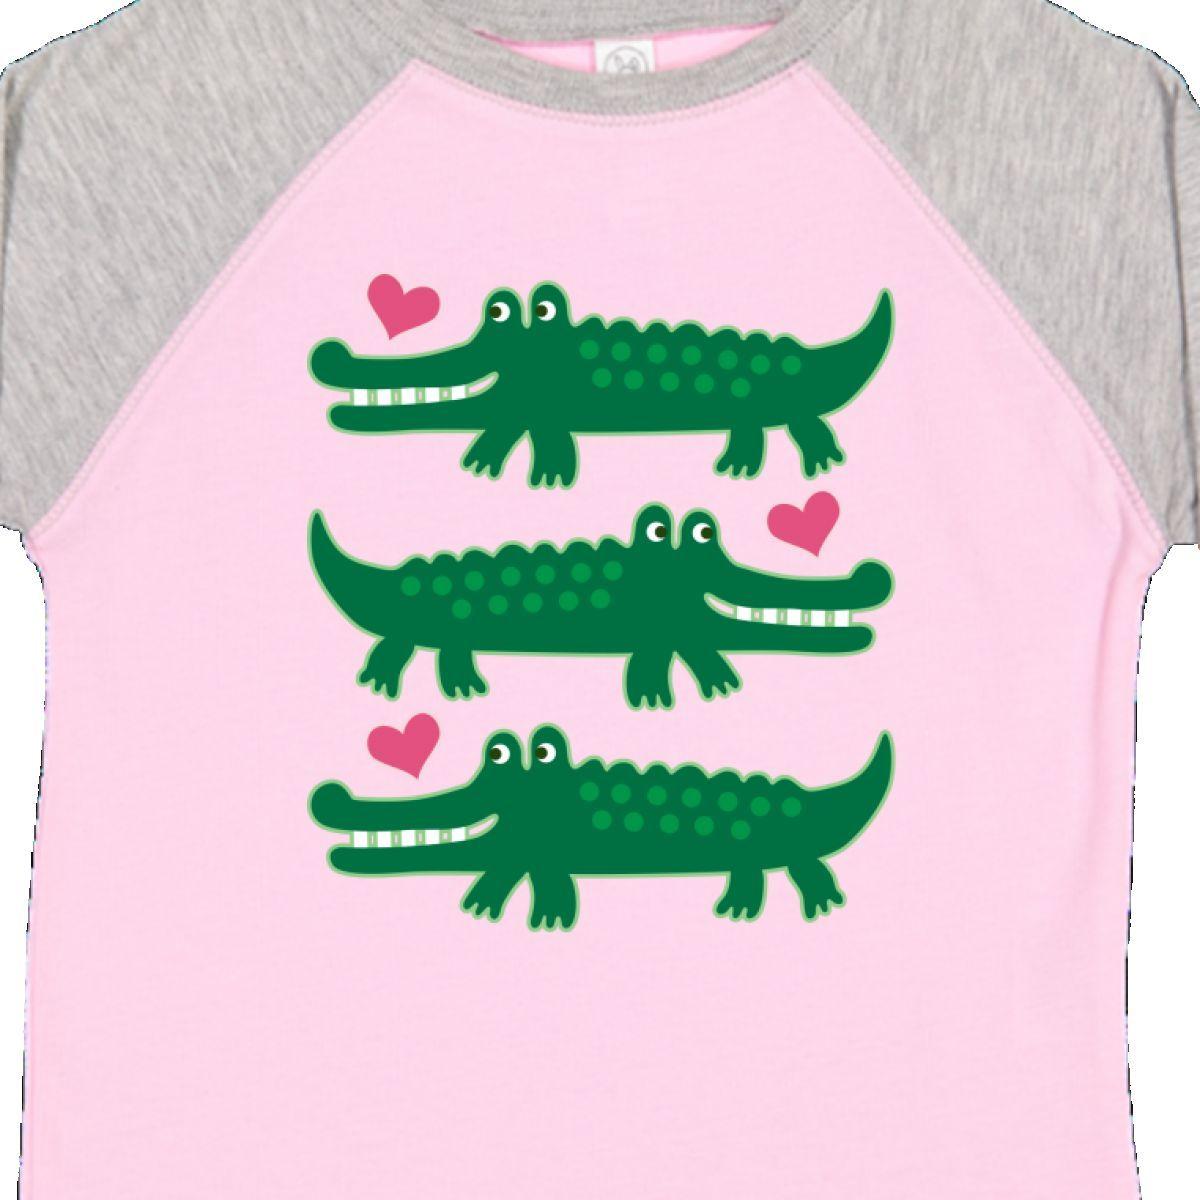 Clothing with Alligator Logo - Inktastic Alligator Crocodile Reptile Toddler T Shirt Animals Cute